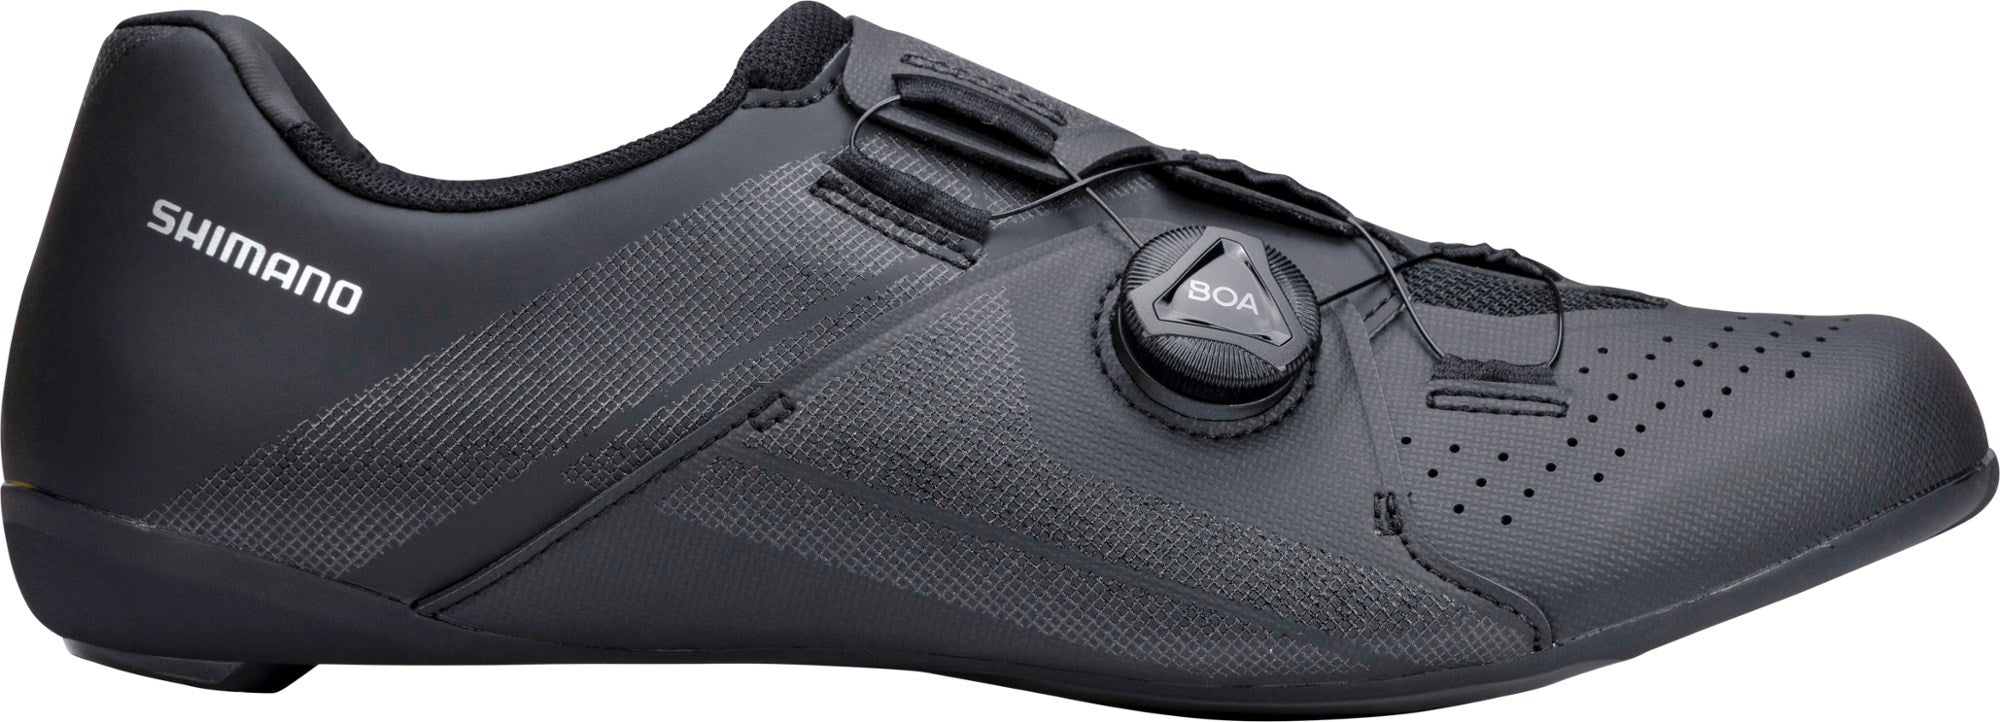 Photos - Cycling Shoes Shimano RC3 Road Shoes - Black - 47 ESHRC300MGL01S4700G 